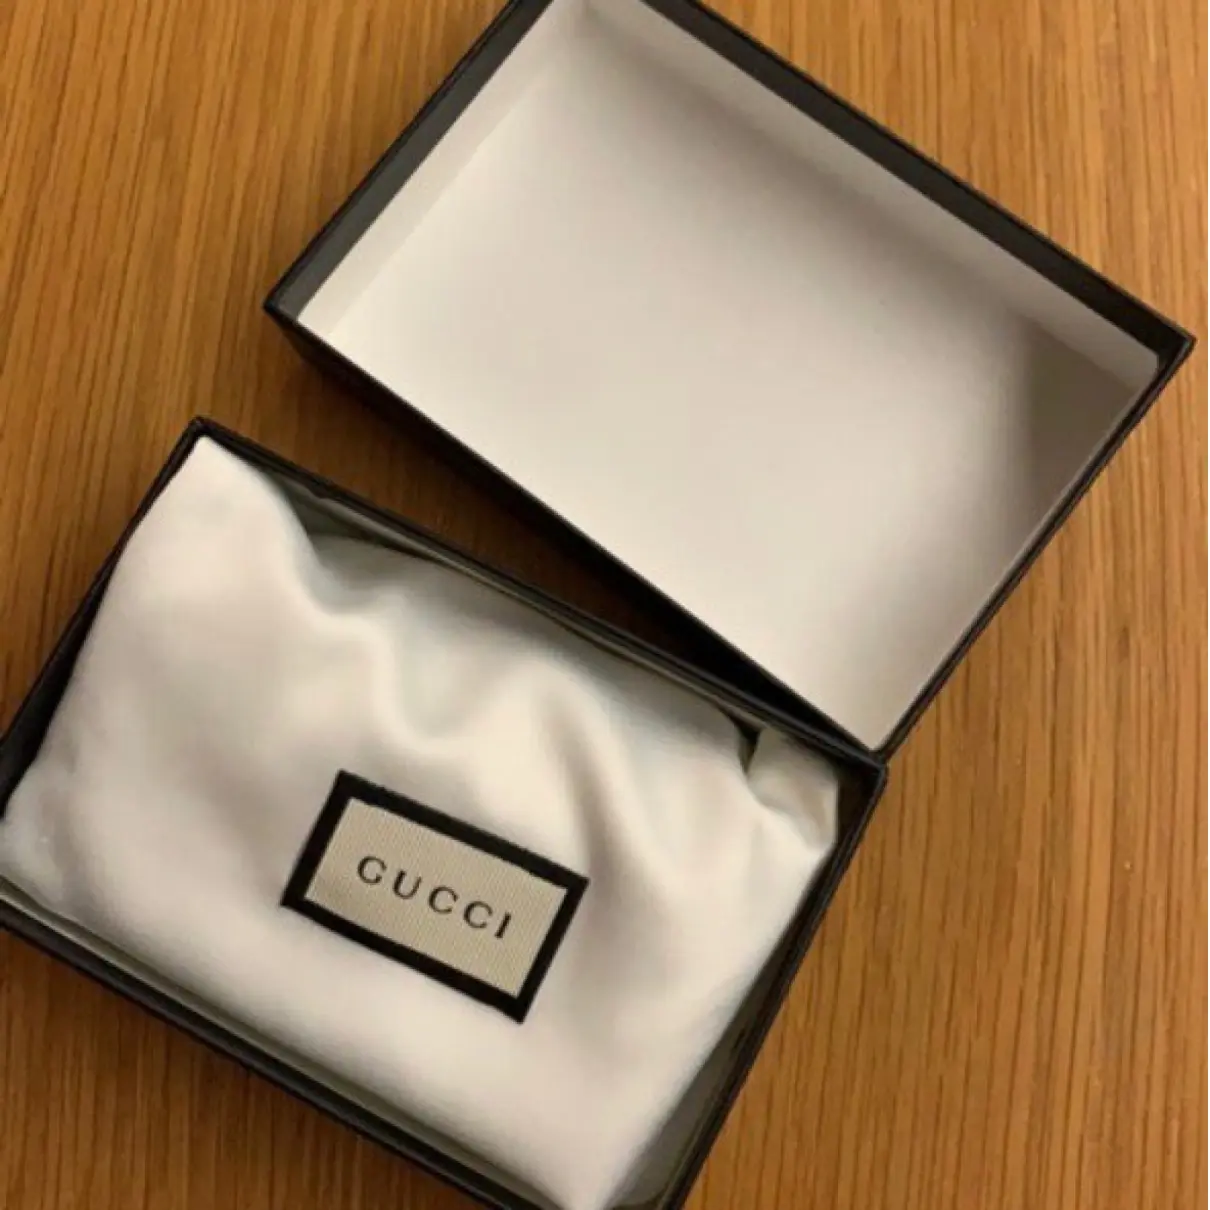 Buy Gucci Interlocking leather key ring online